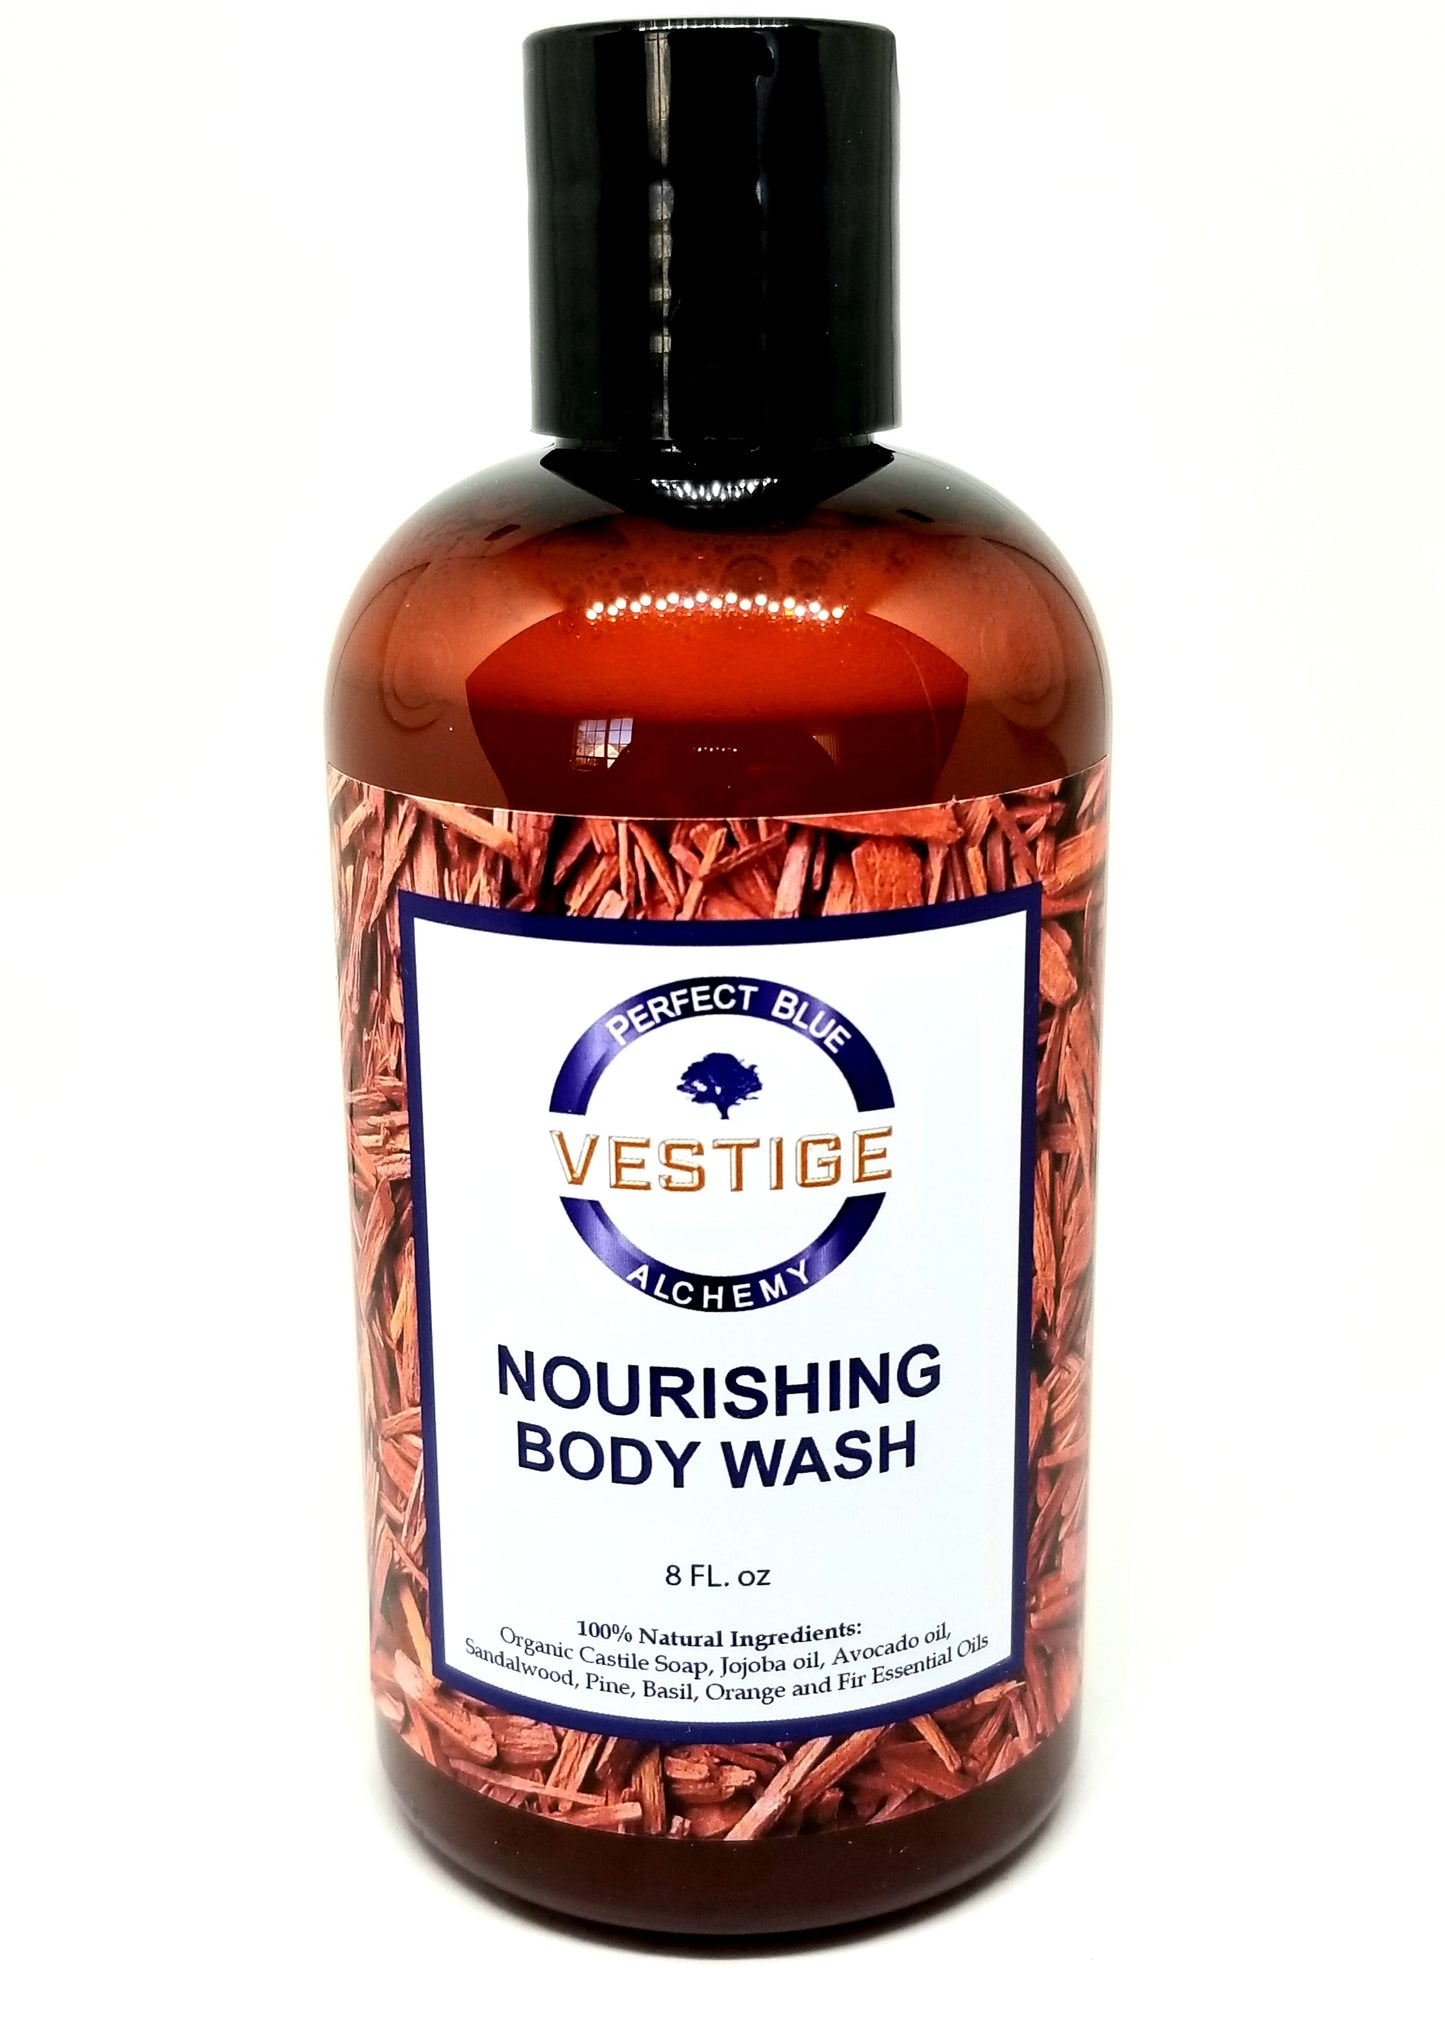 Vestige Nourishing Body Wash